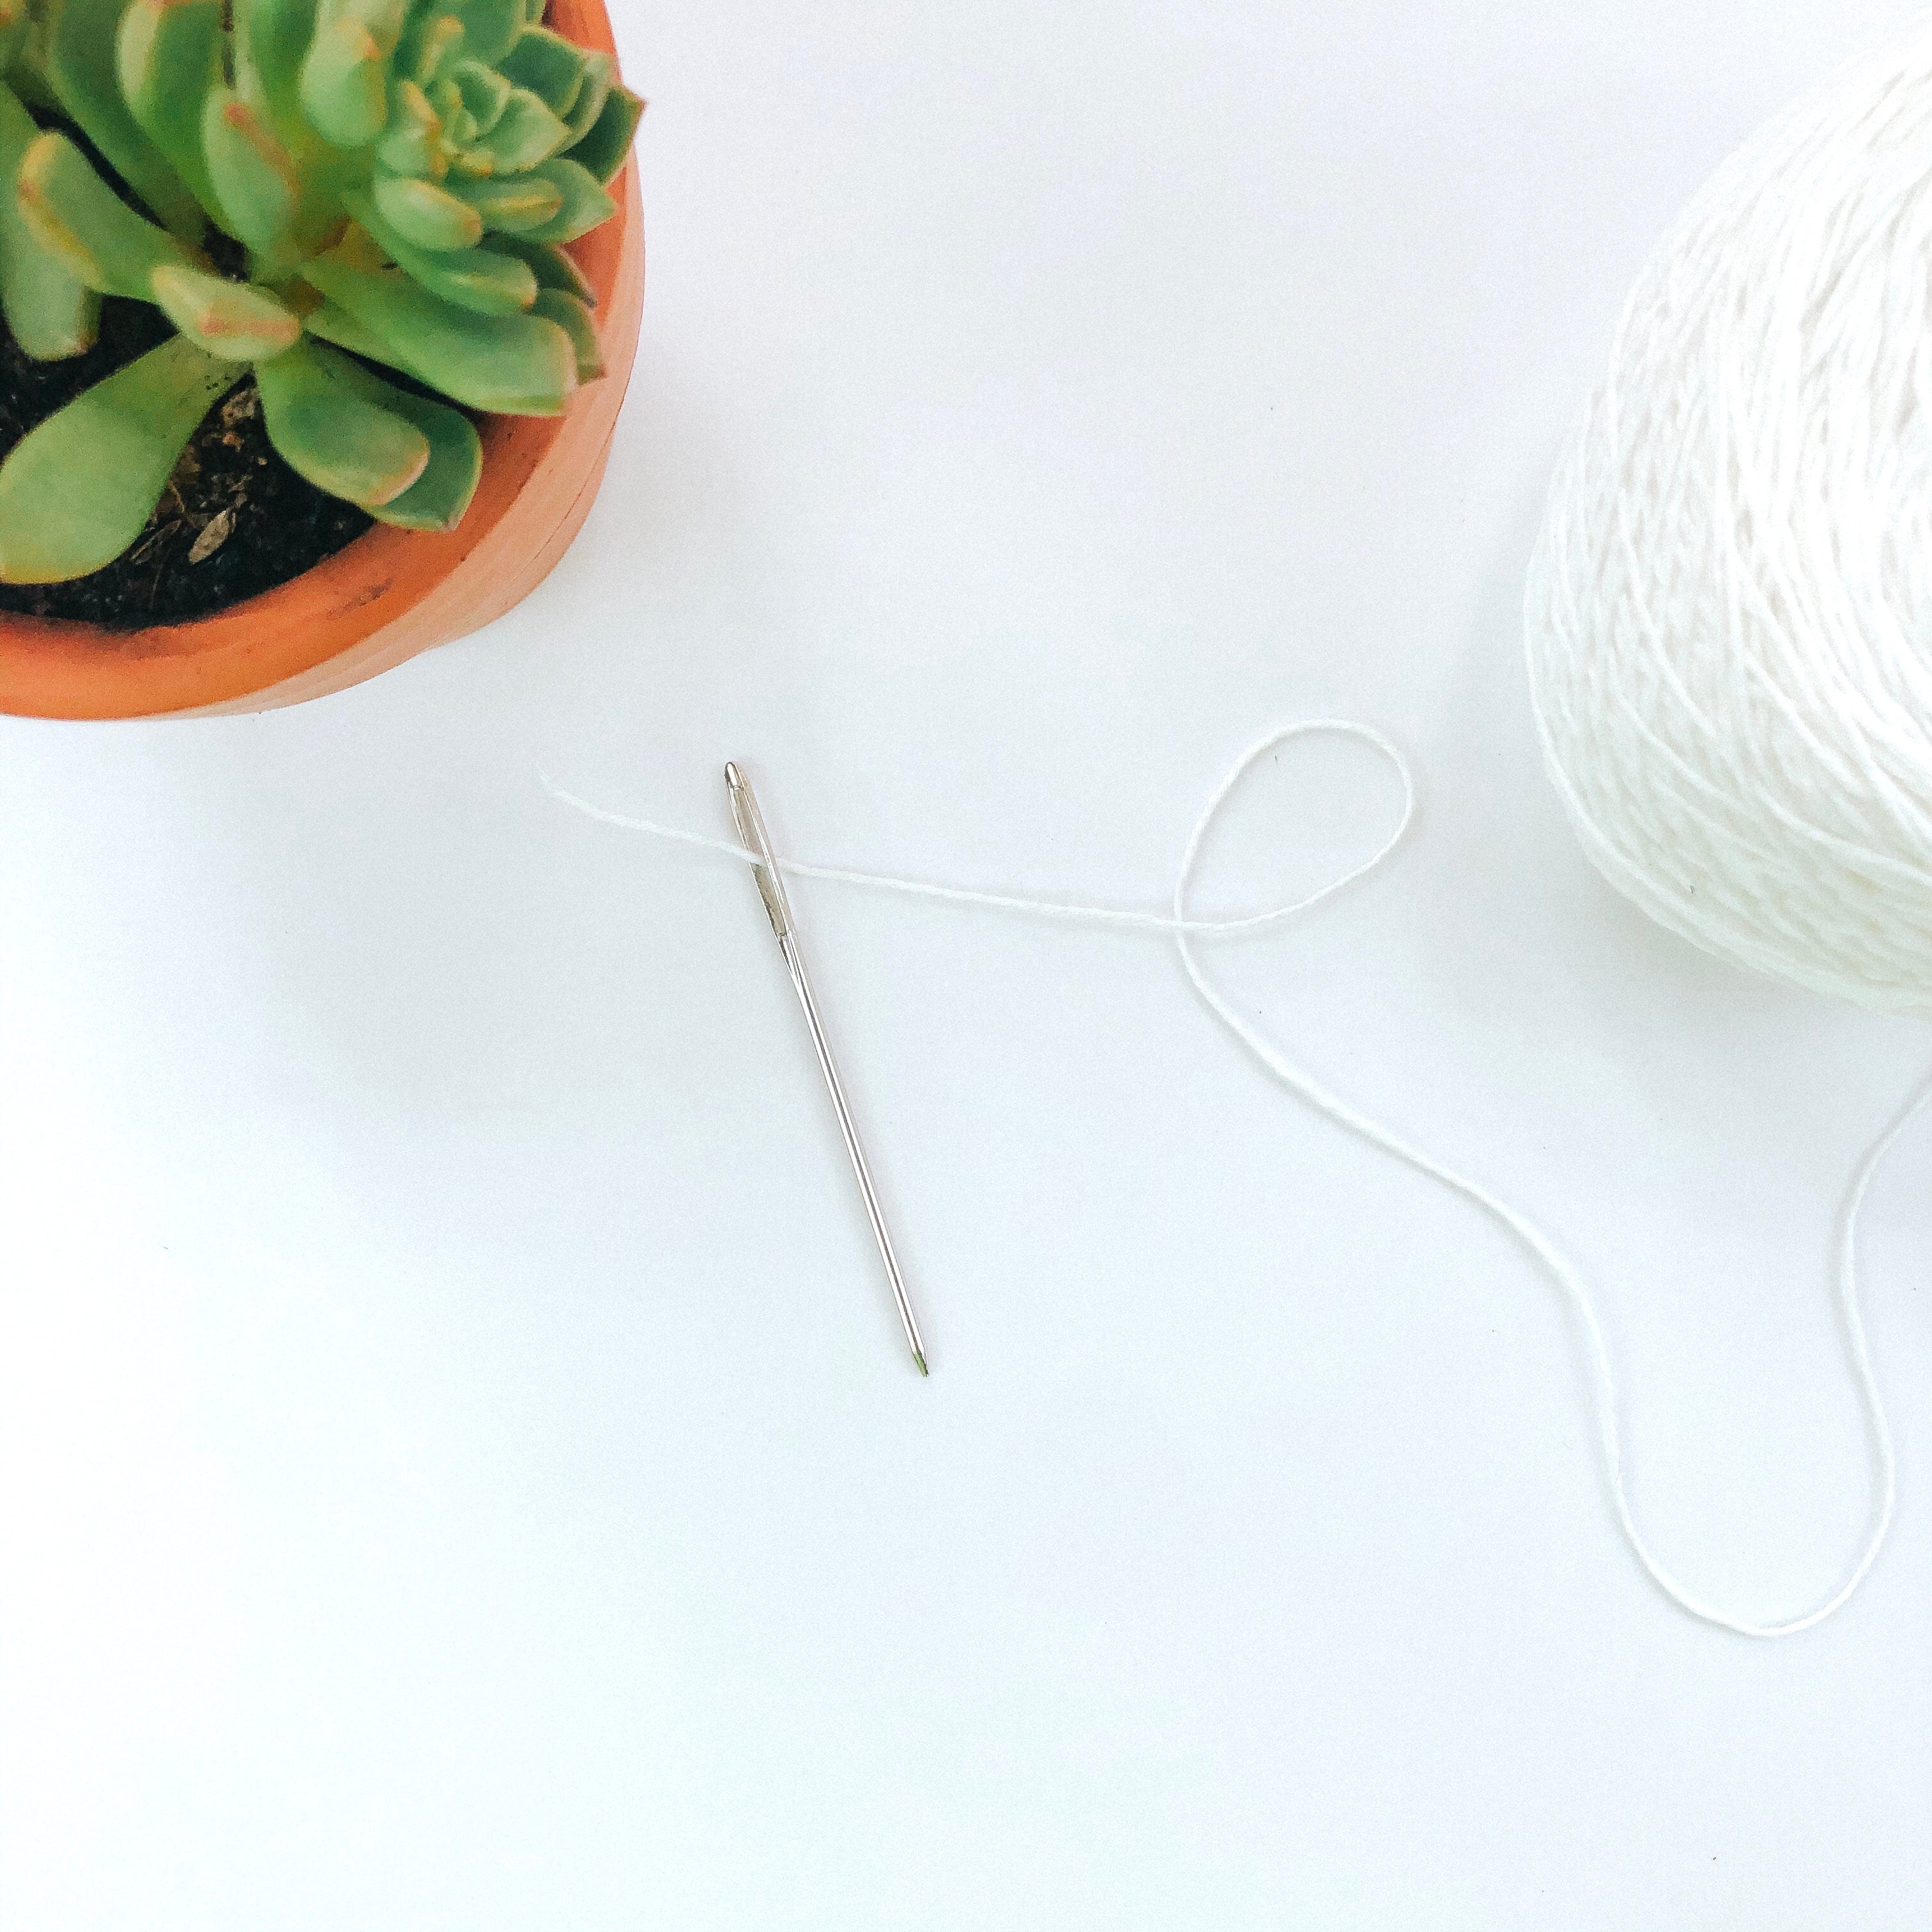 Yarn Needle For Dreamcatcher